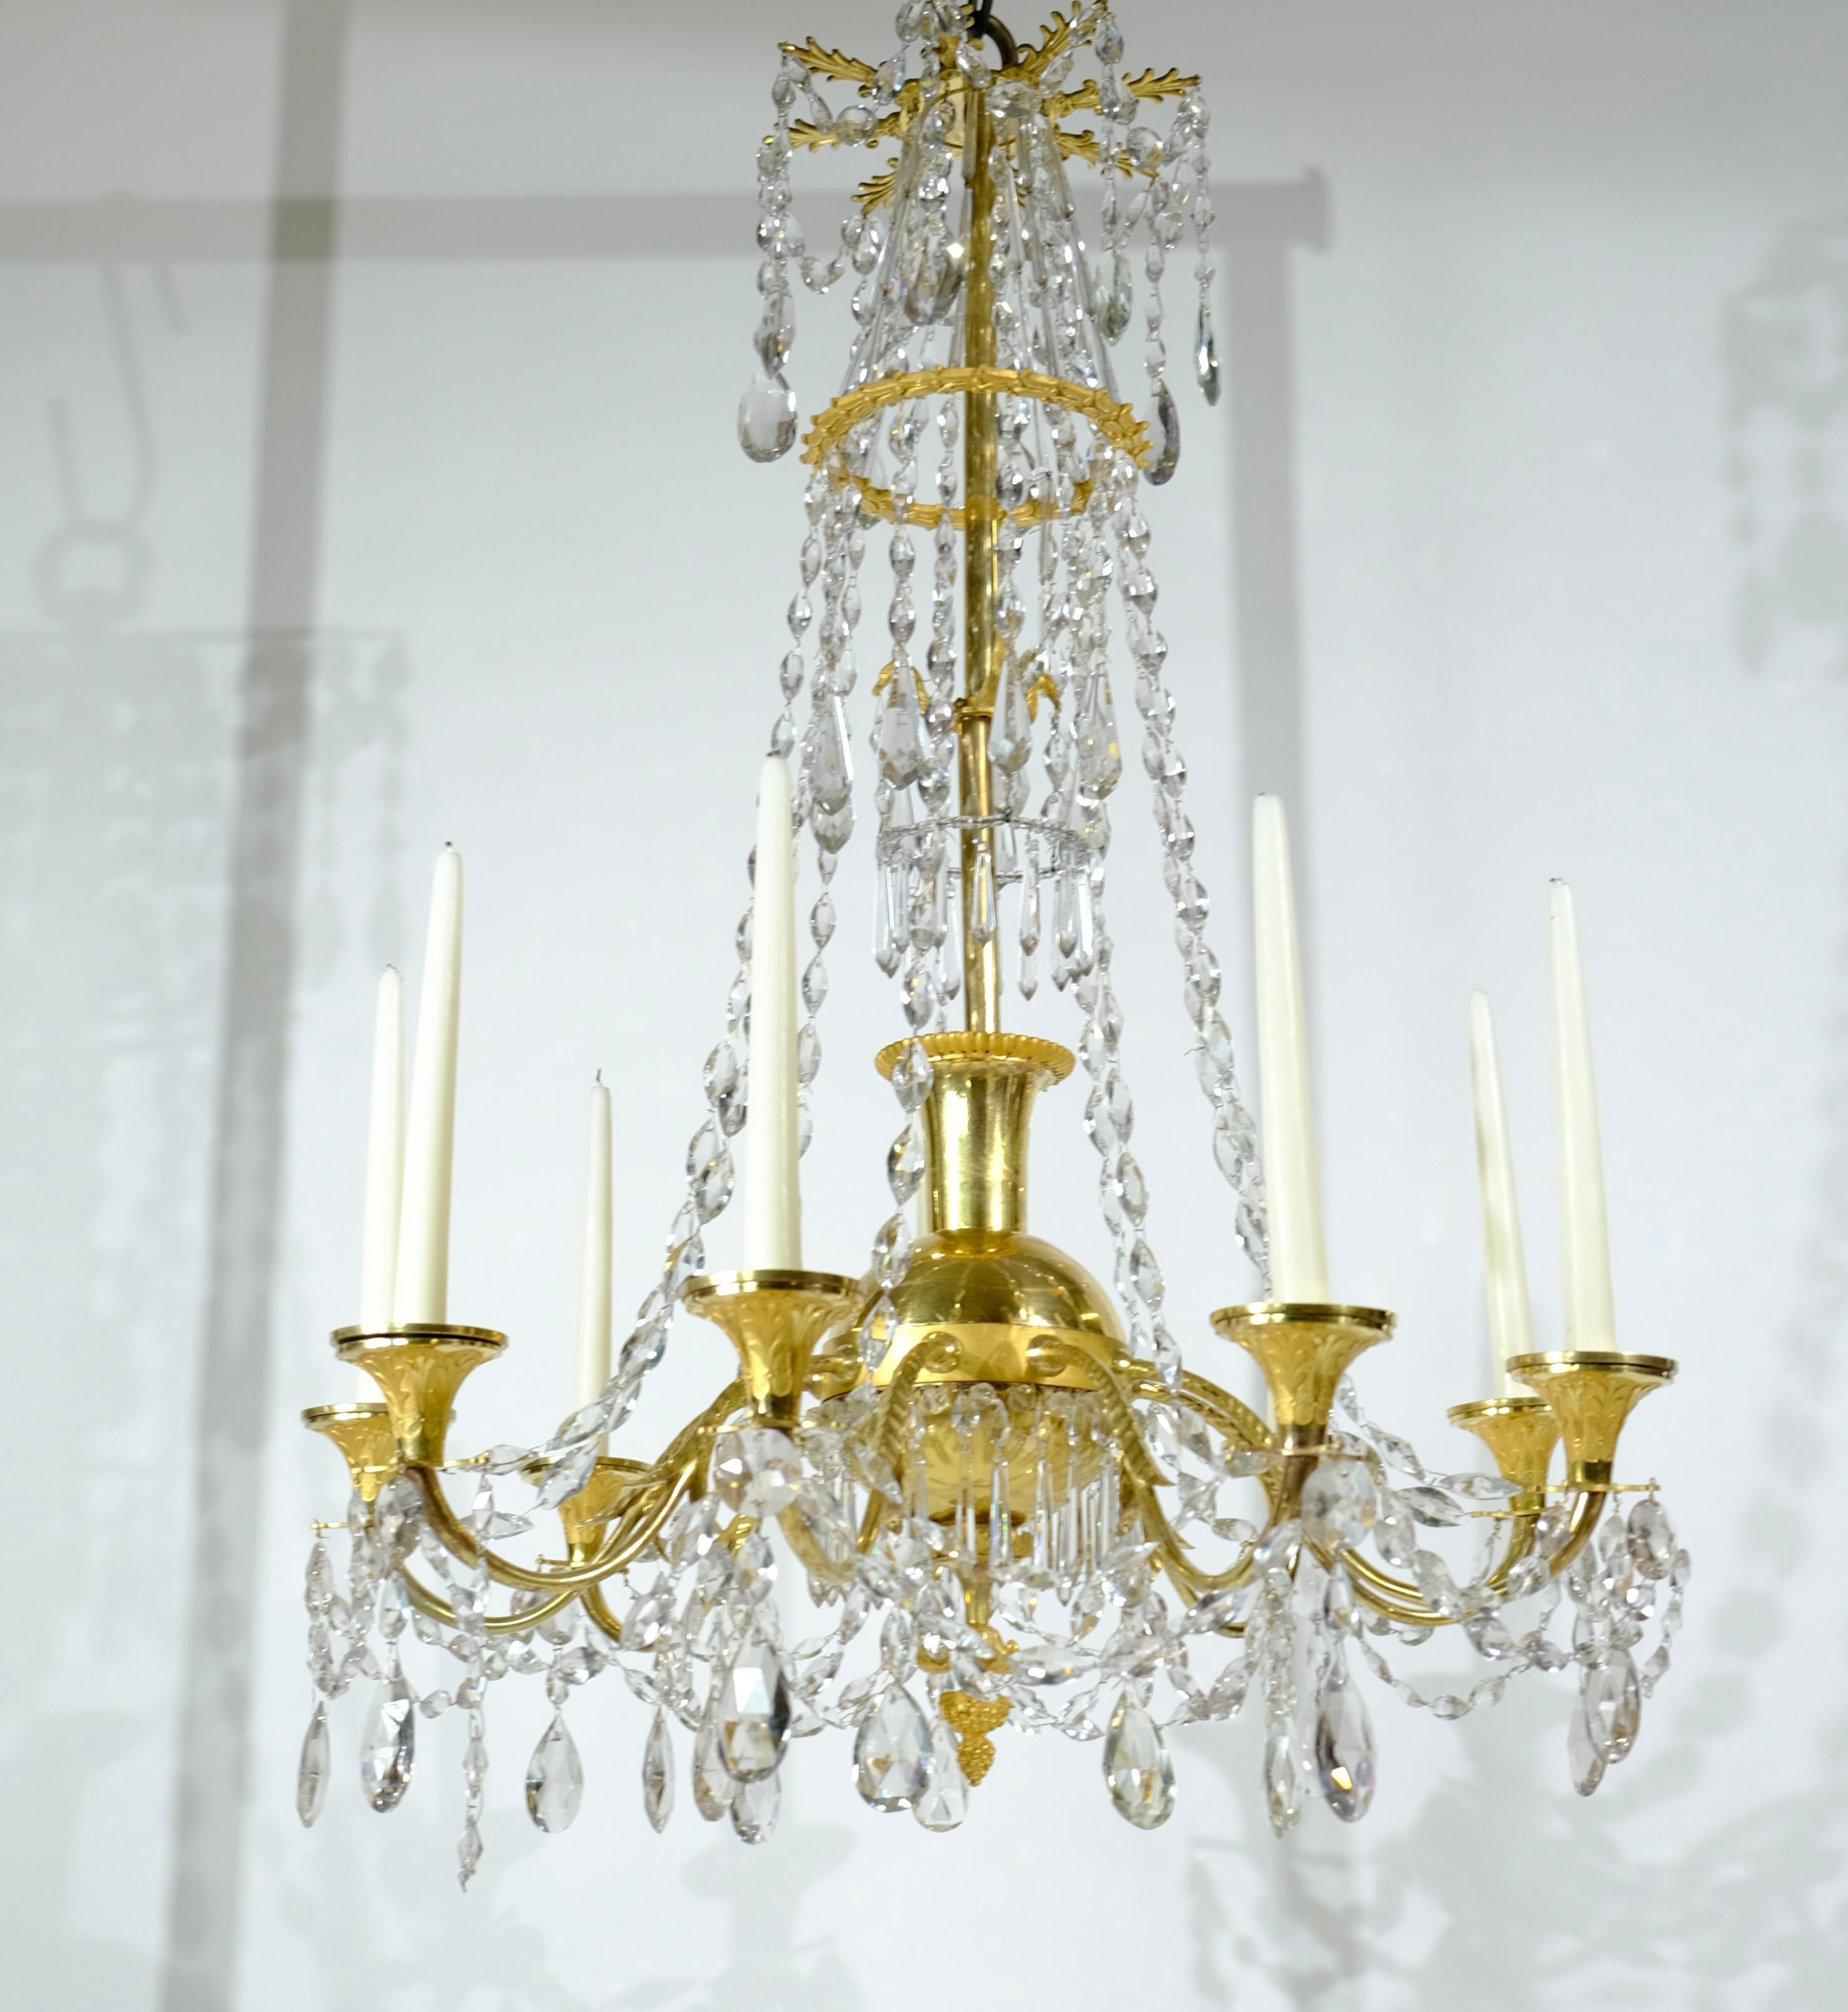 Directoire Antique French chandelier made around year 1800